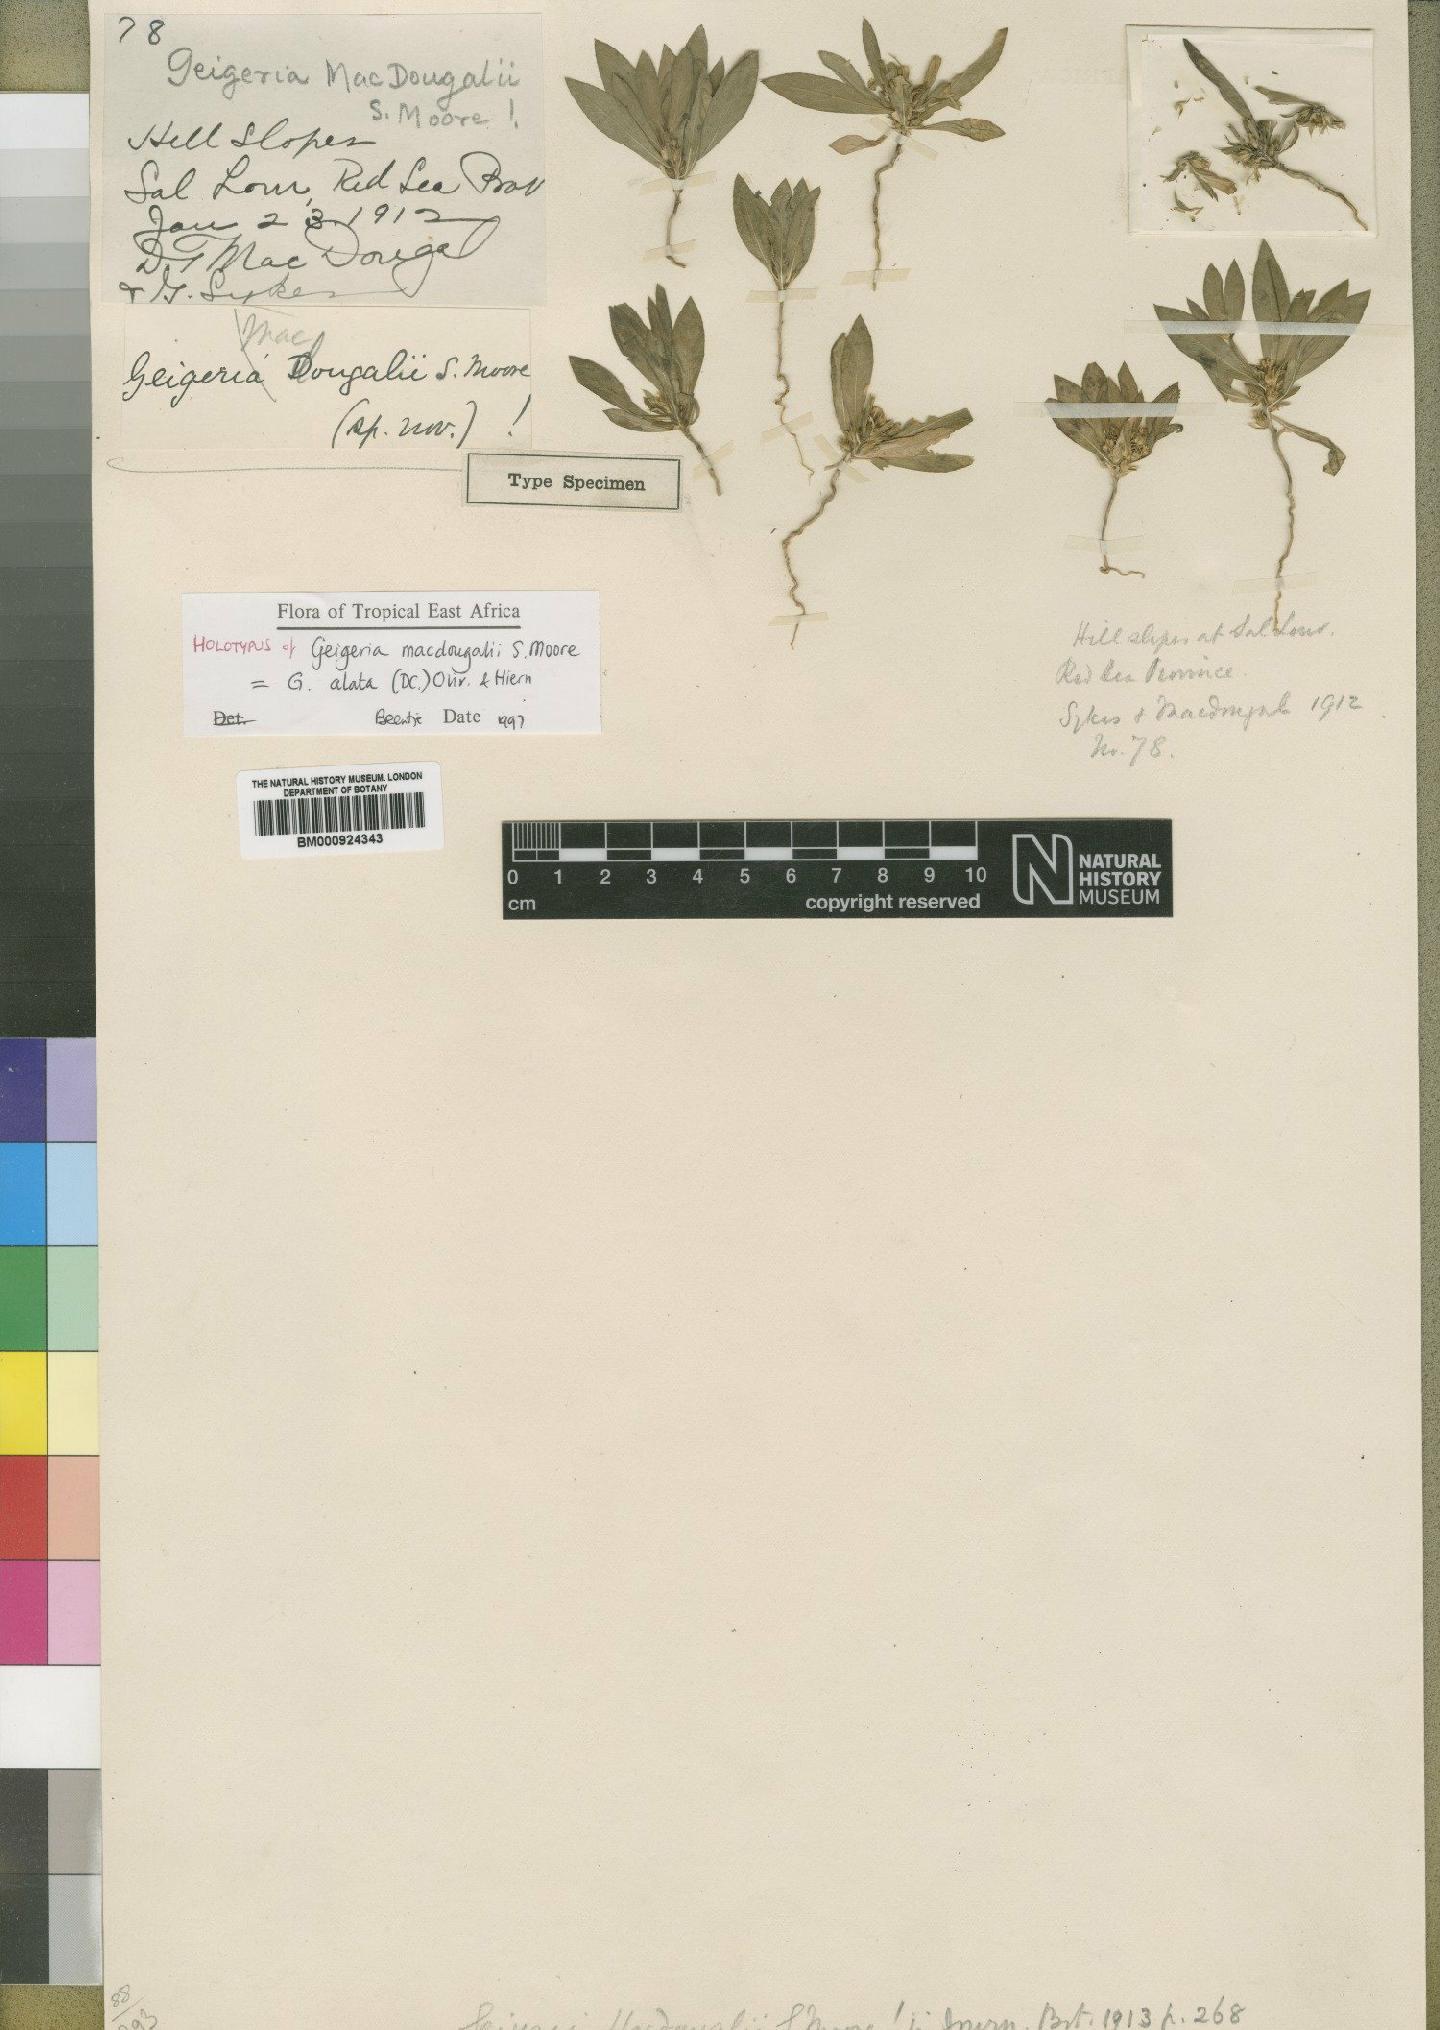 To NHMUK collection (Geigeria macdougalii Moore; Type; NHMUK:ecatalogue:4529371)